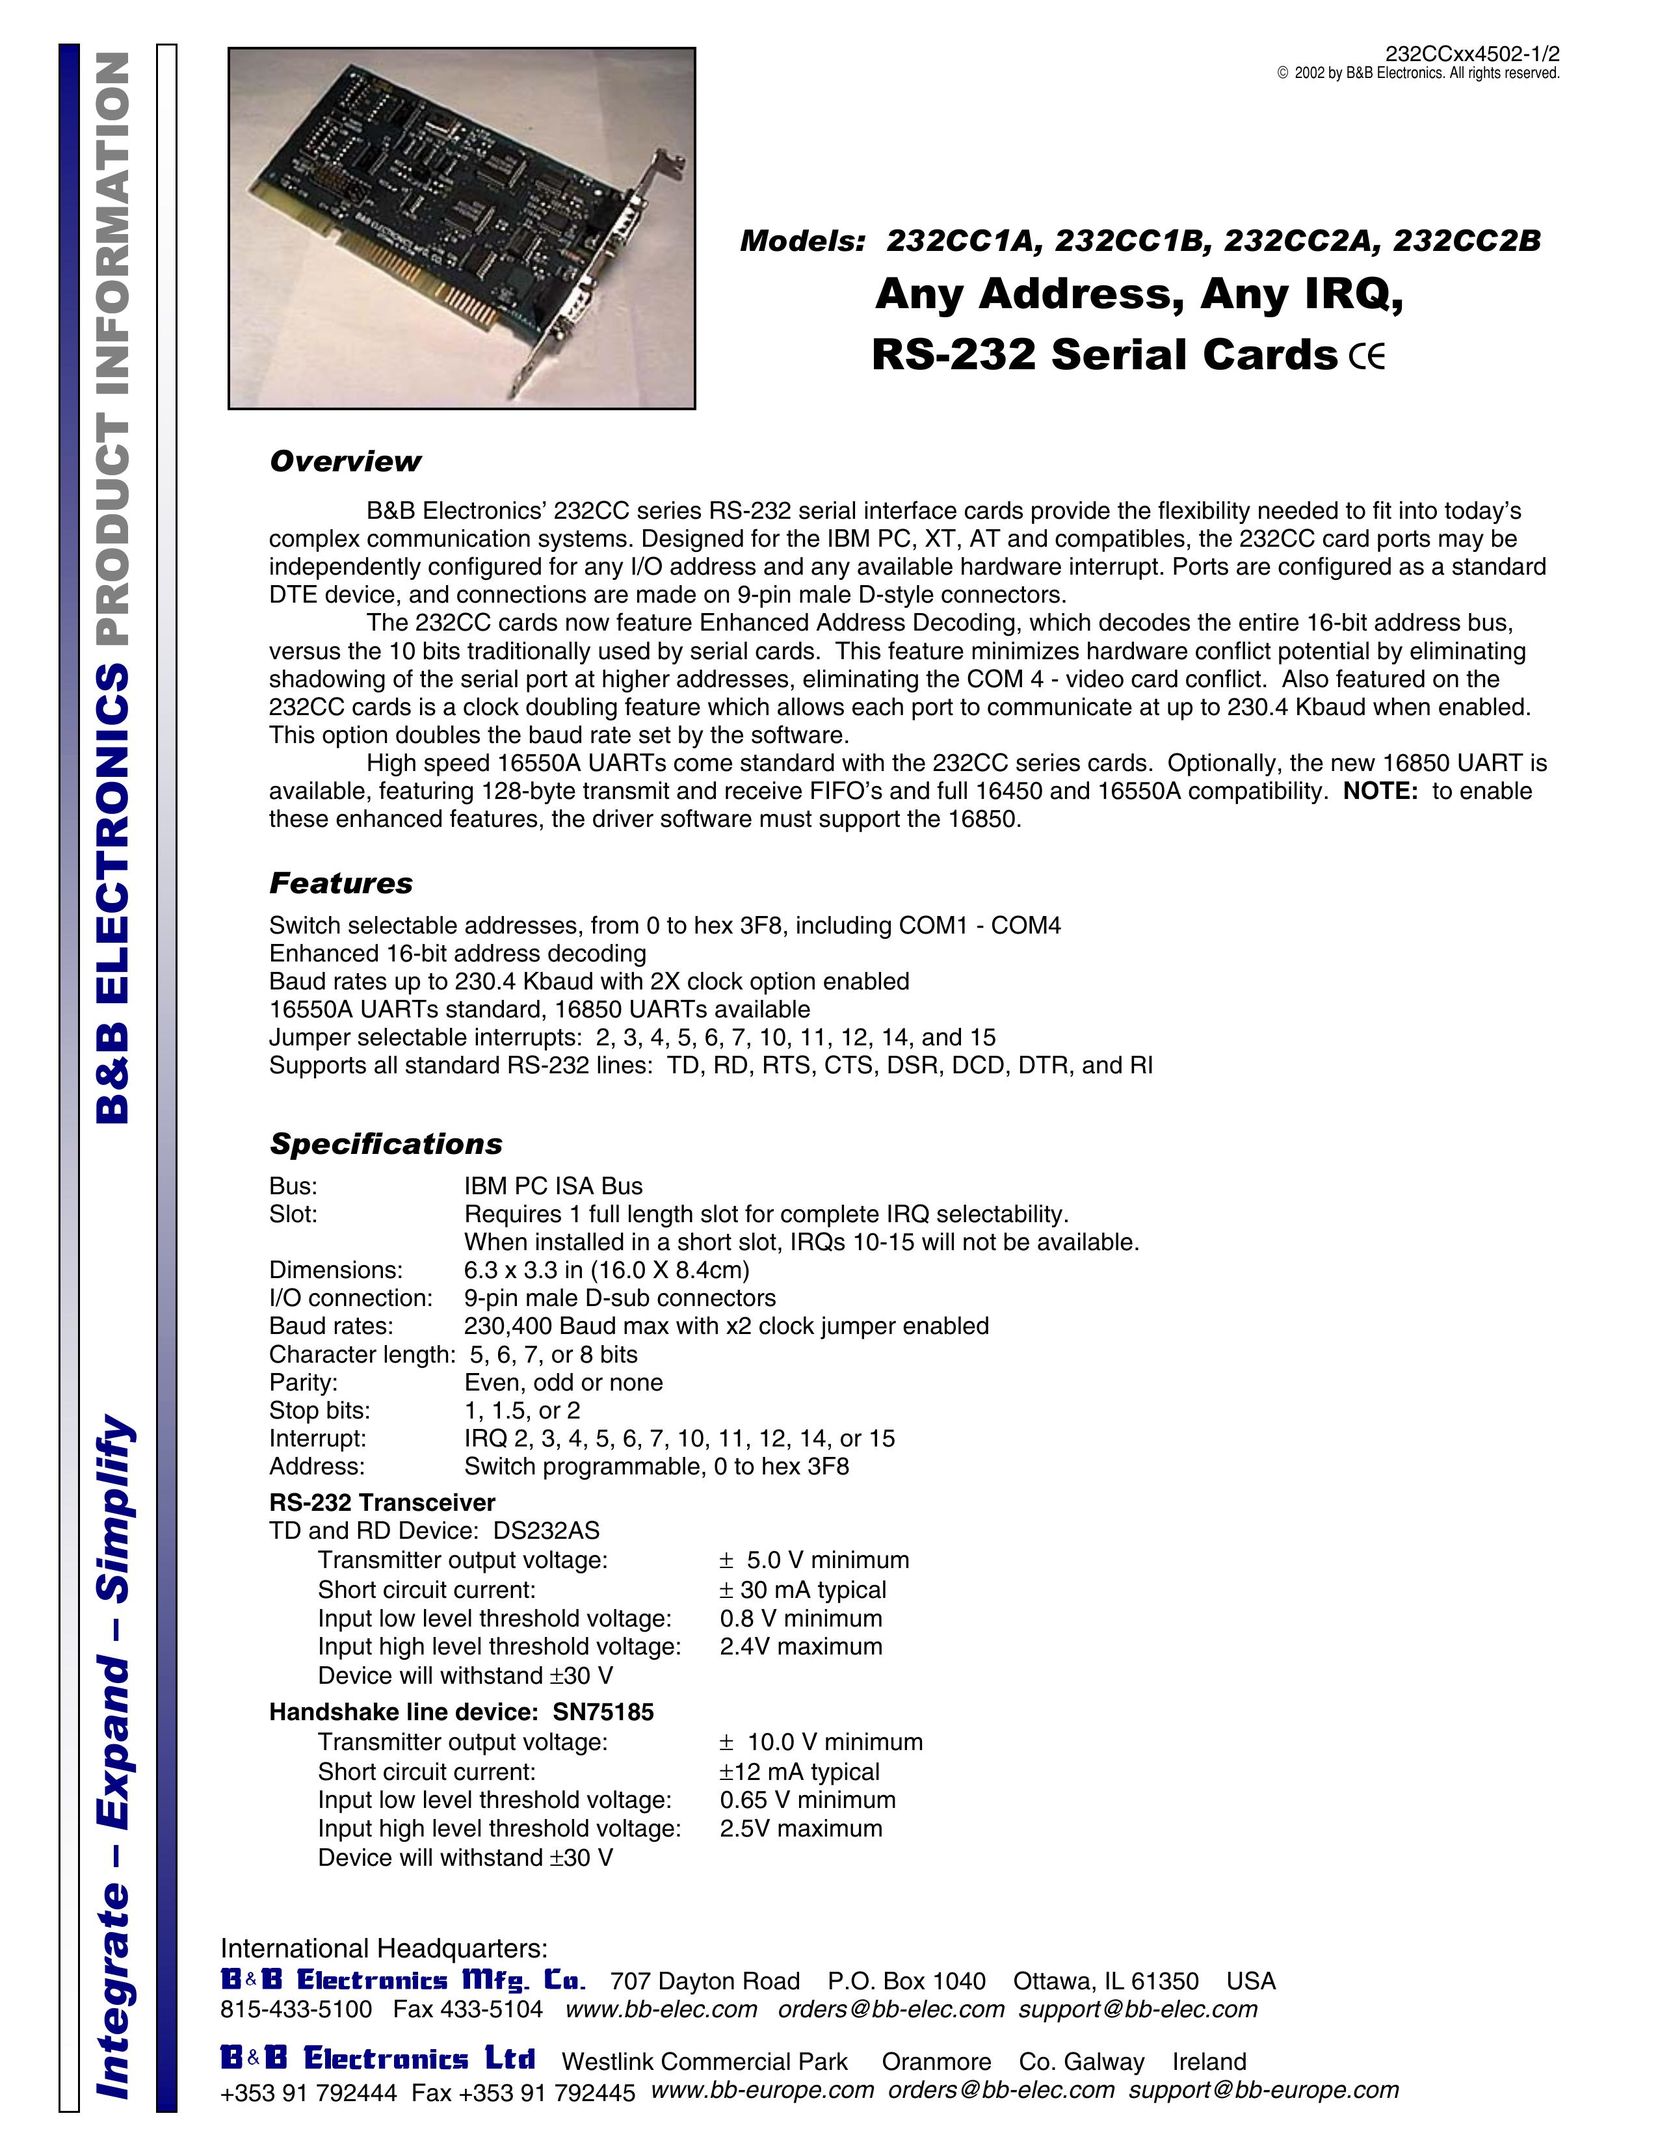 B&B Electronics 232CC2B Network Card User Manual